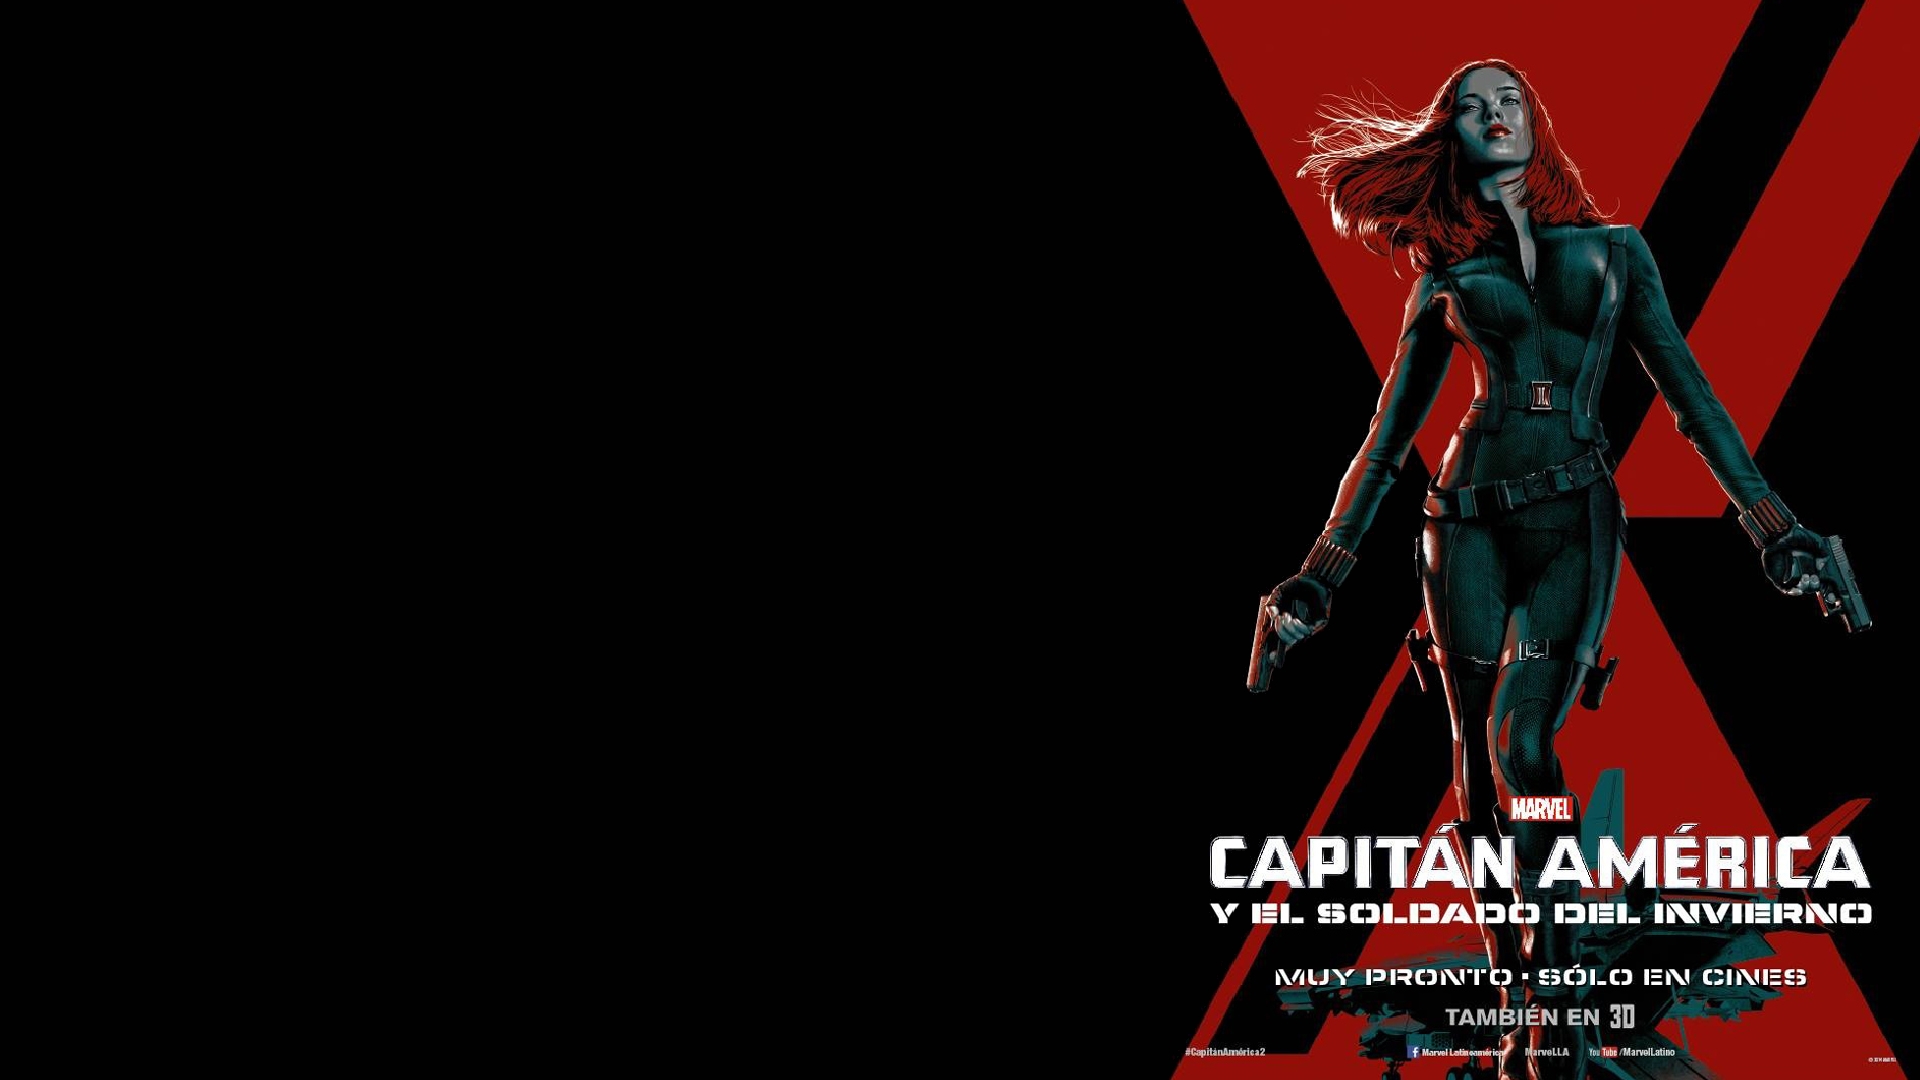 Scarlett Johansson As Natasha Romanoff Black Widow